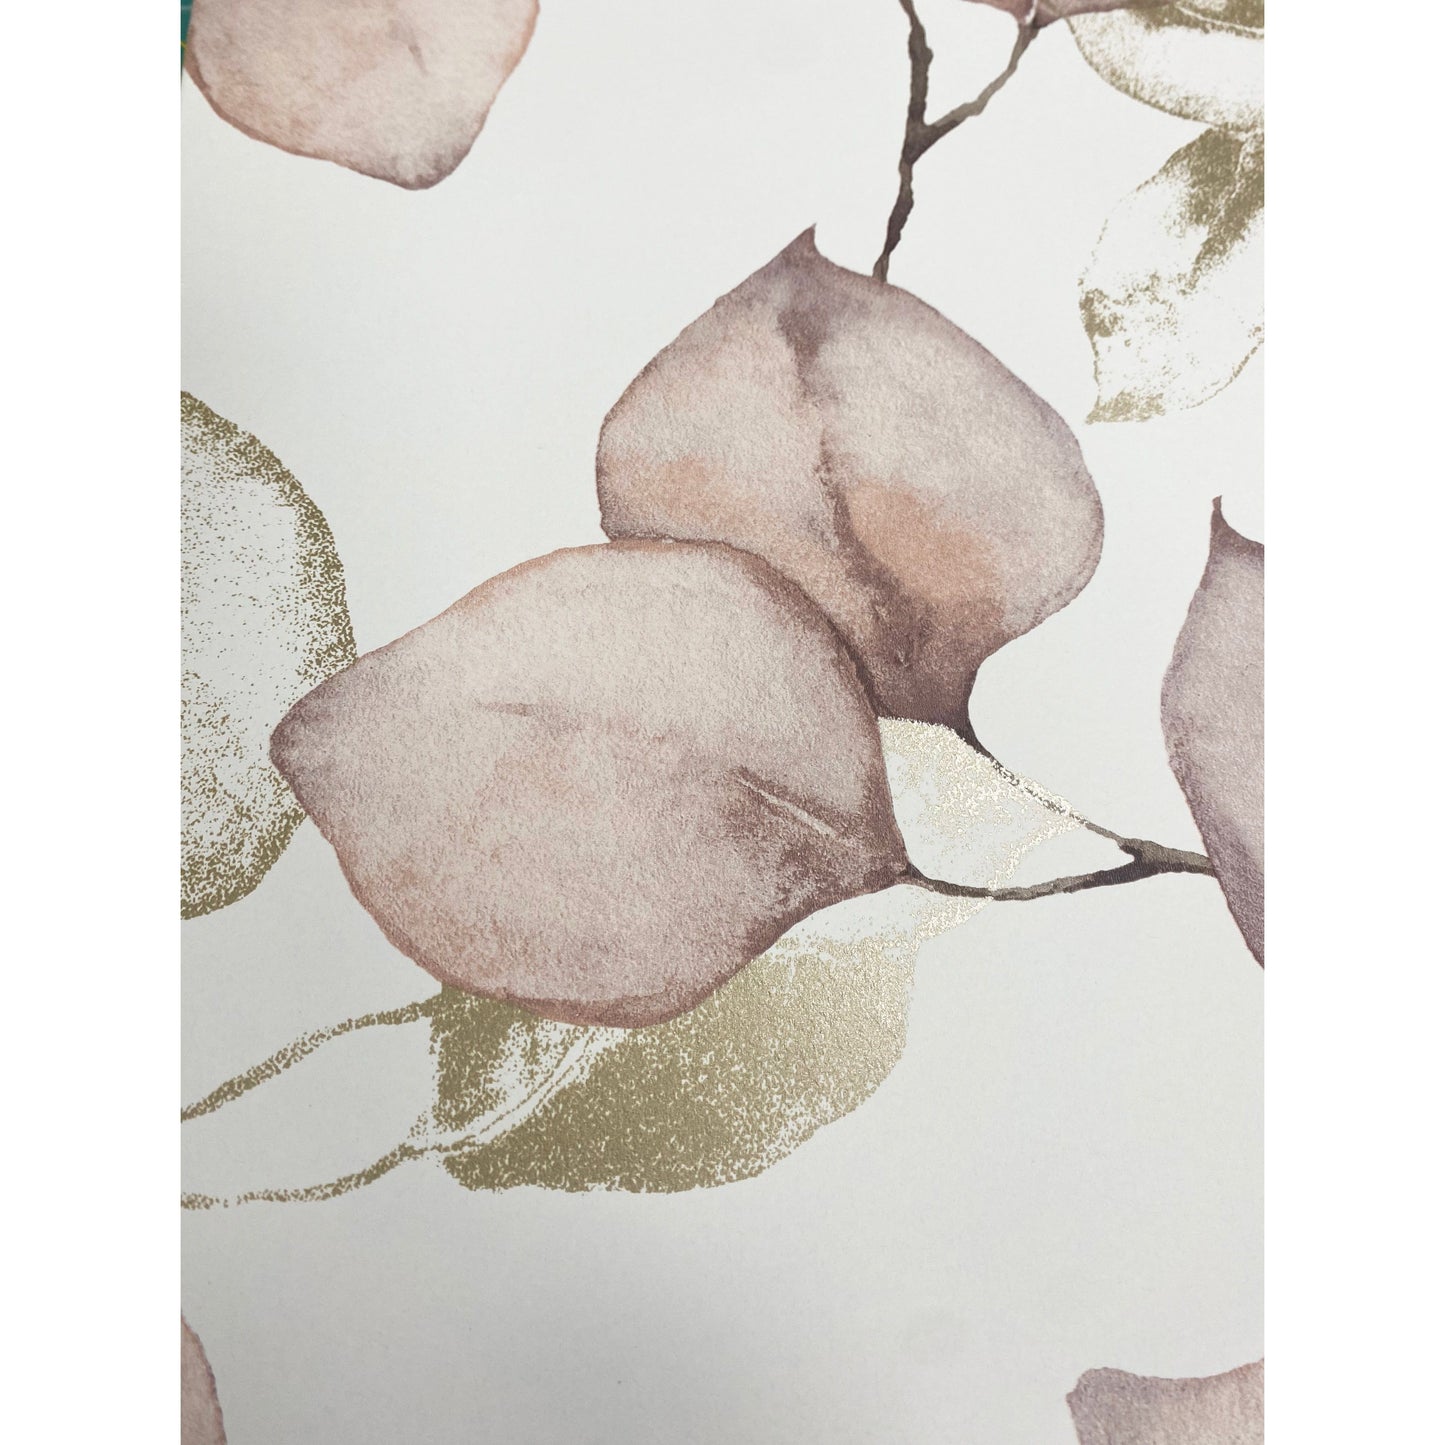 Muriva Eucalyptus Blush Wallpaper (210502)